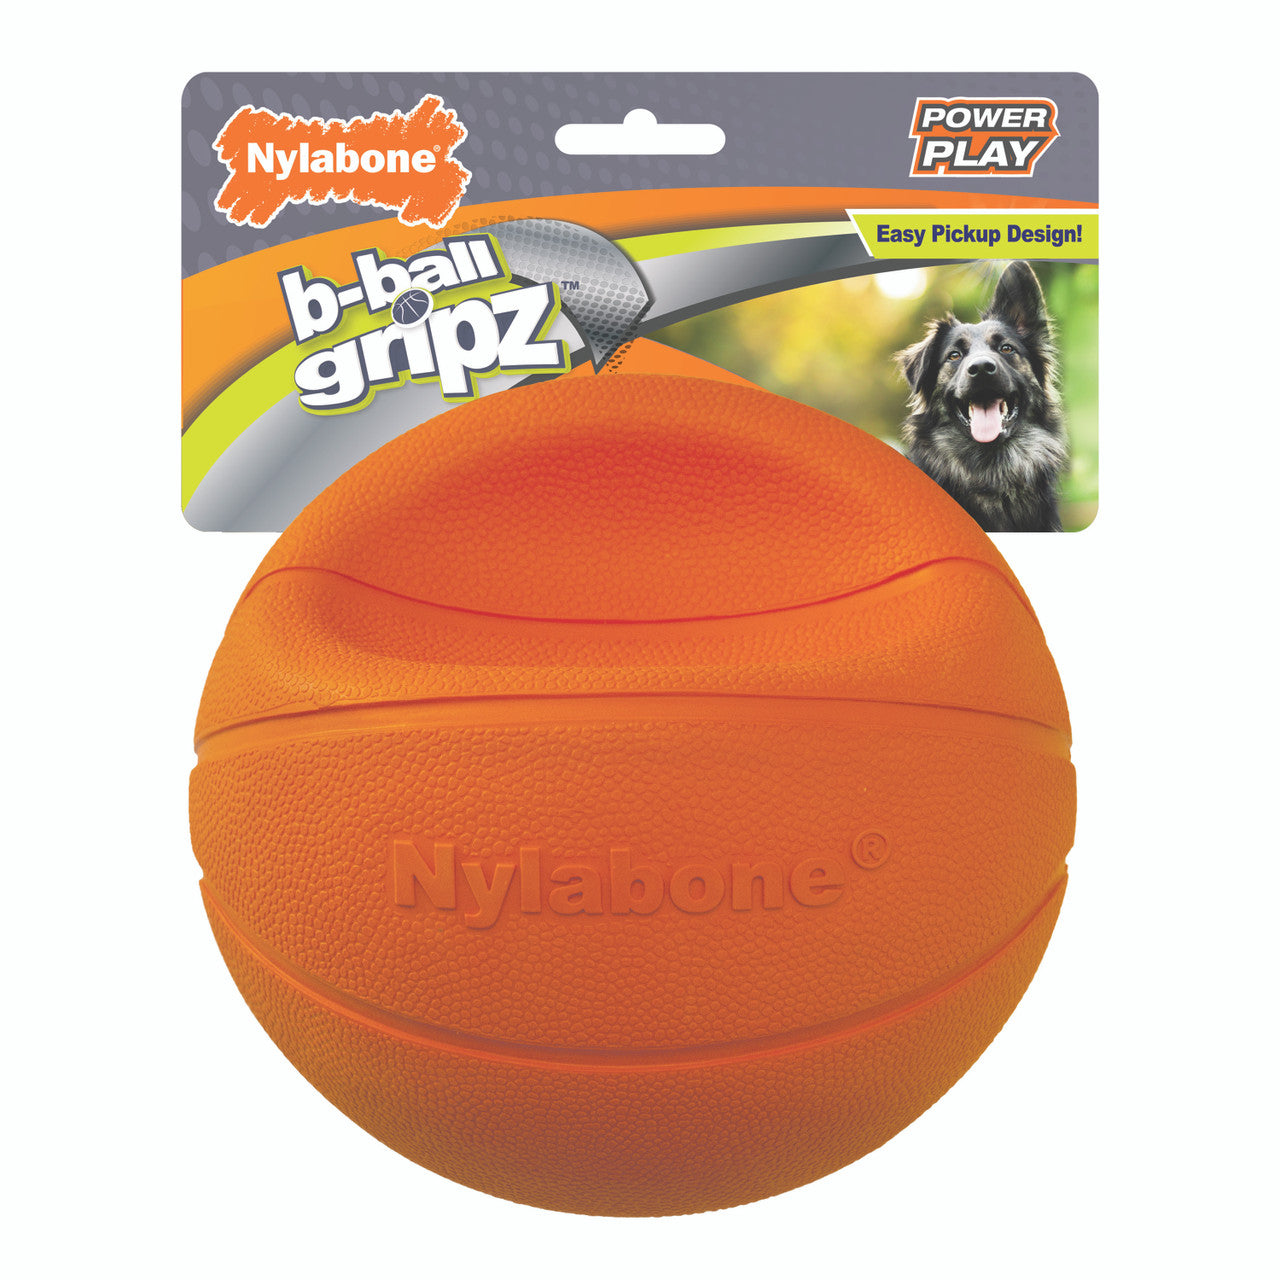 Nylabone Power Play Dog Basketball B-Ball Gripz Large (1 Count)